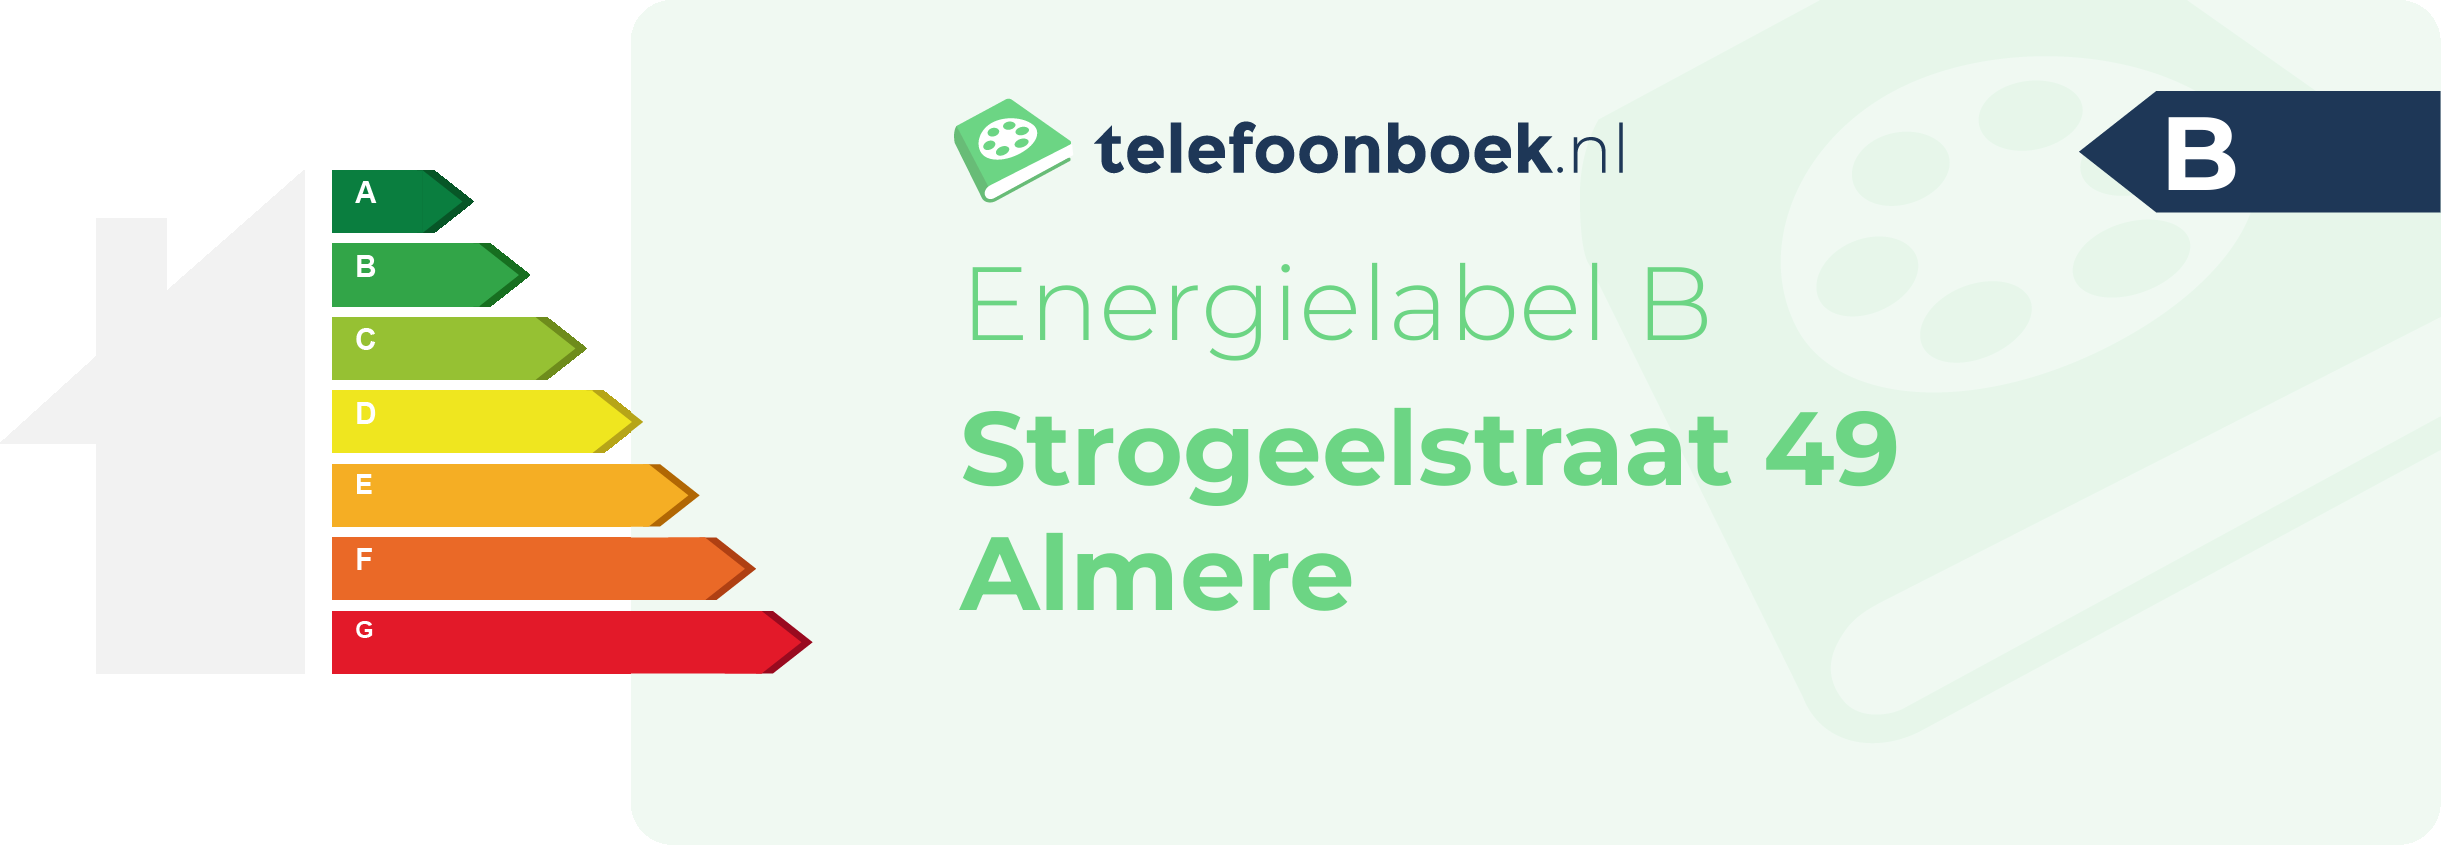 Energielabel Strogeelstraat 49 Almere